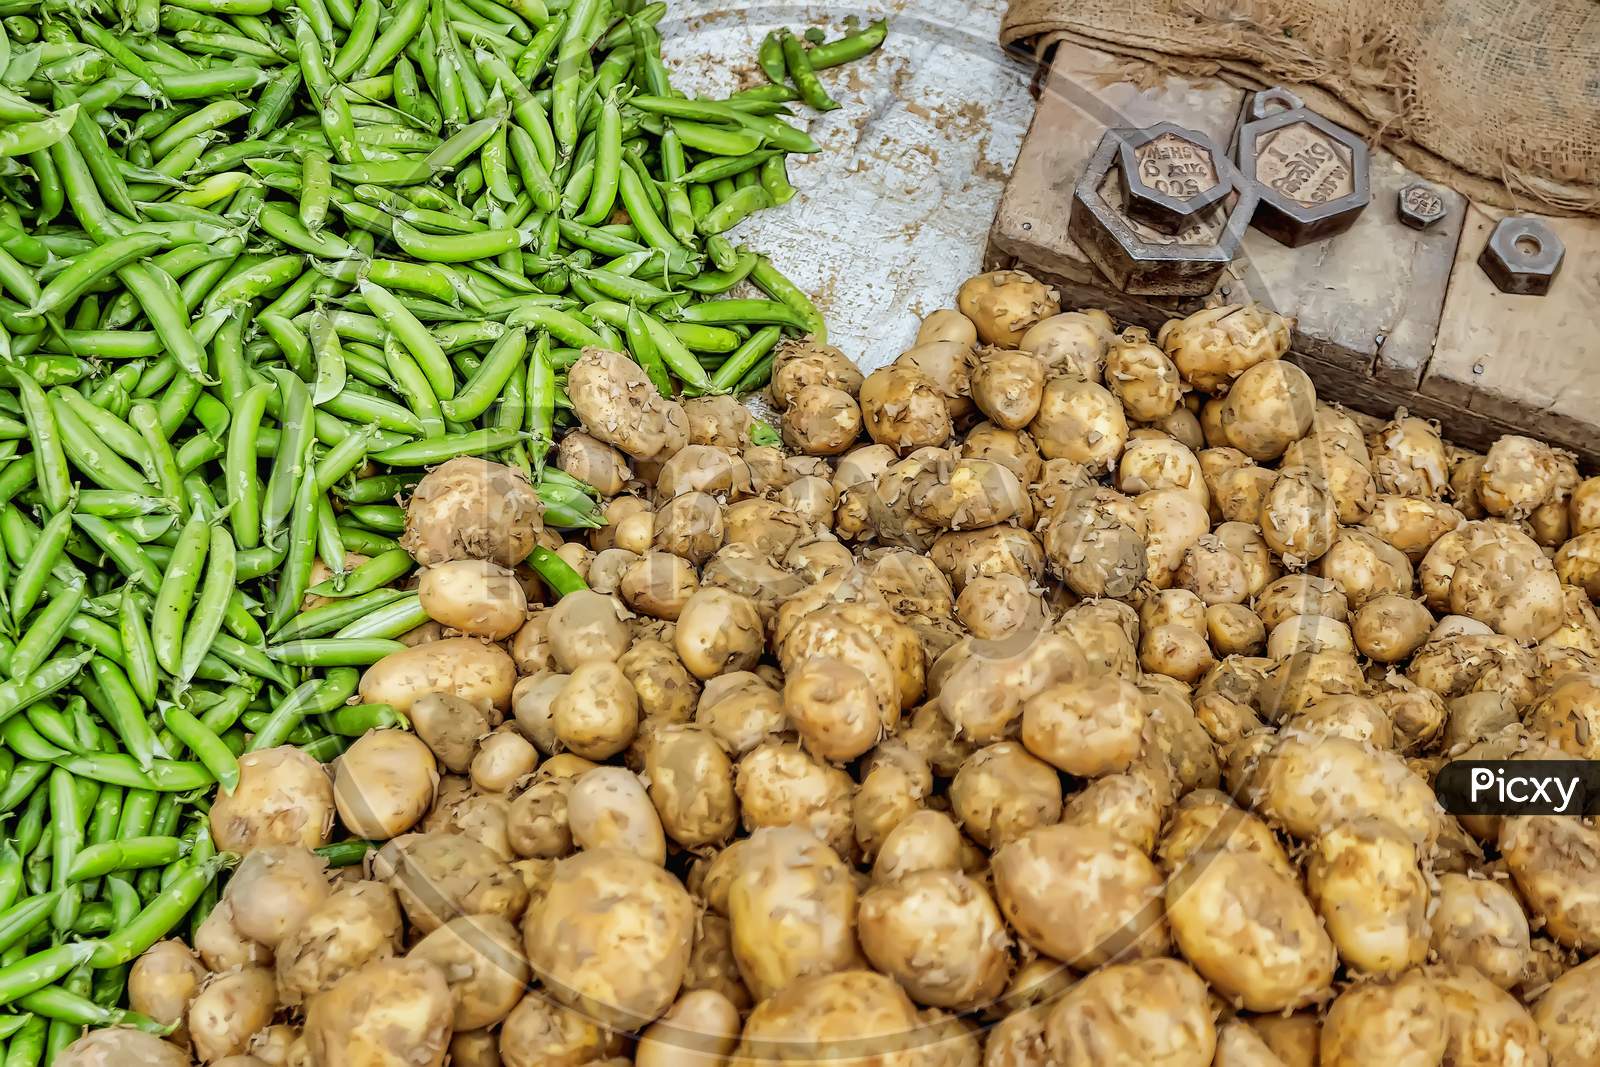 Flesh veggies in a Indian market found at all street markets.